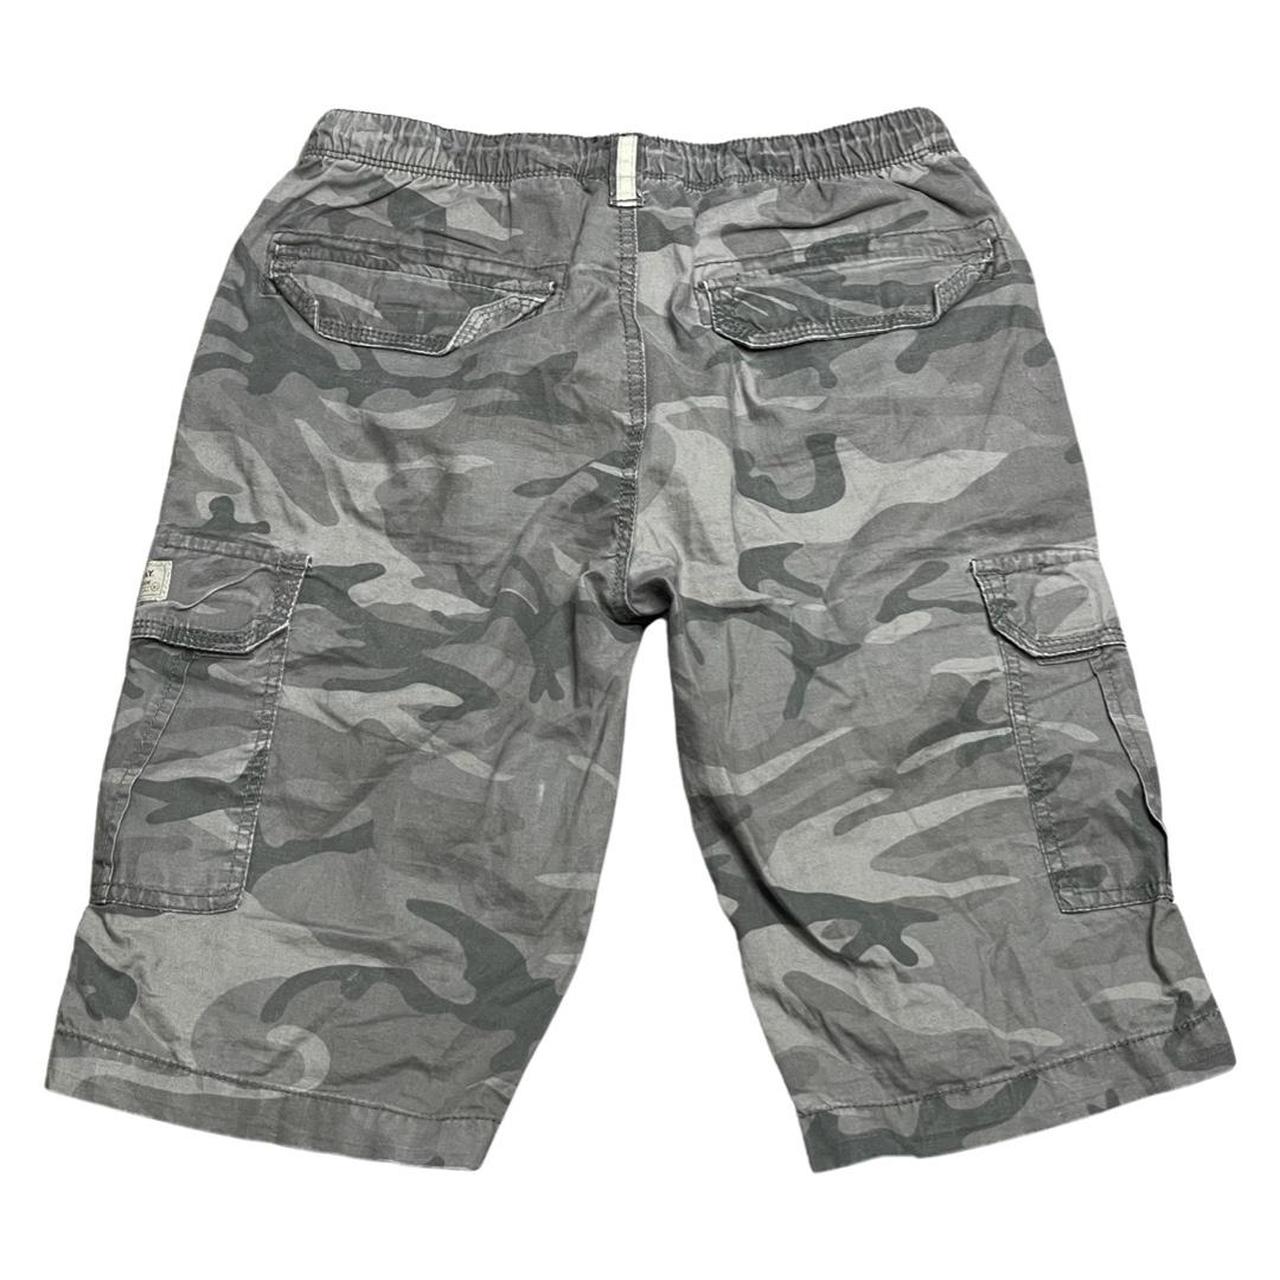 Product Image 2 - ☠︎ unionbay cargo shorts ☠︎

☠︎